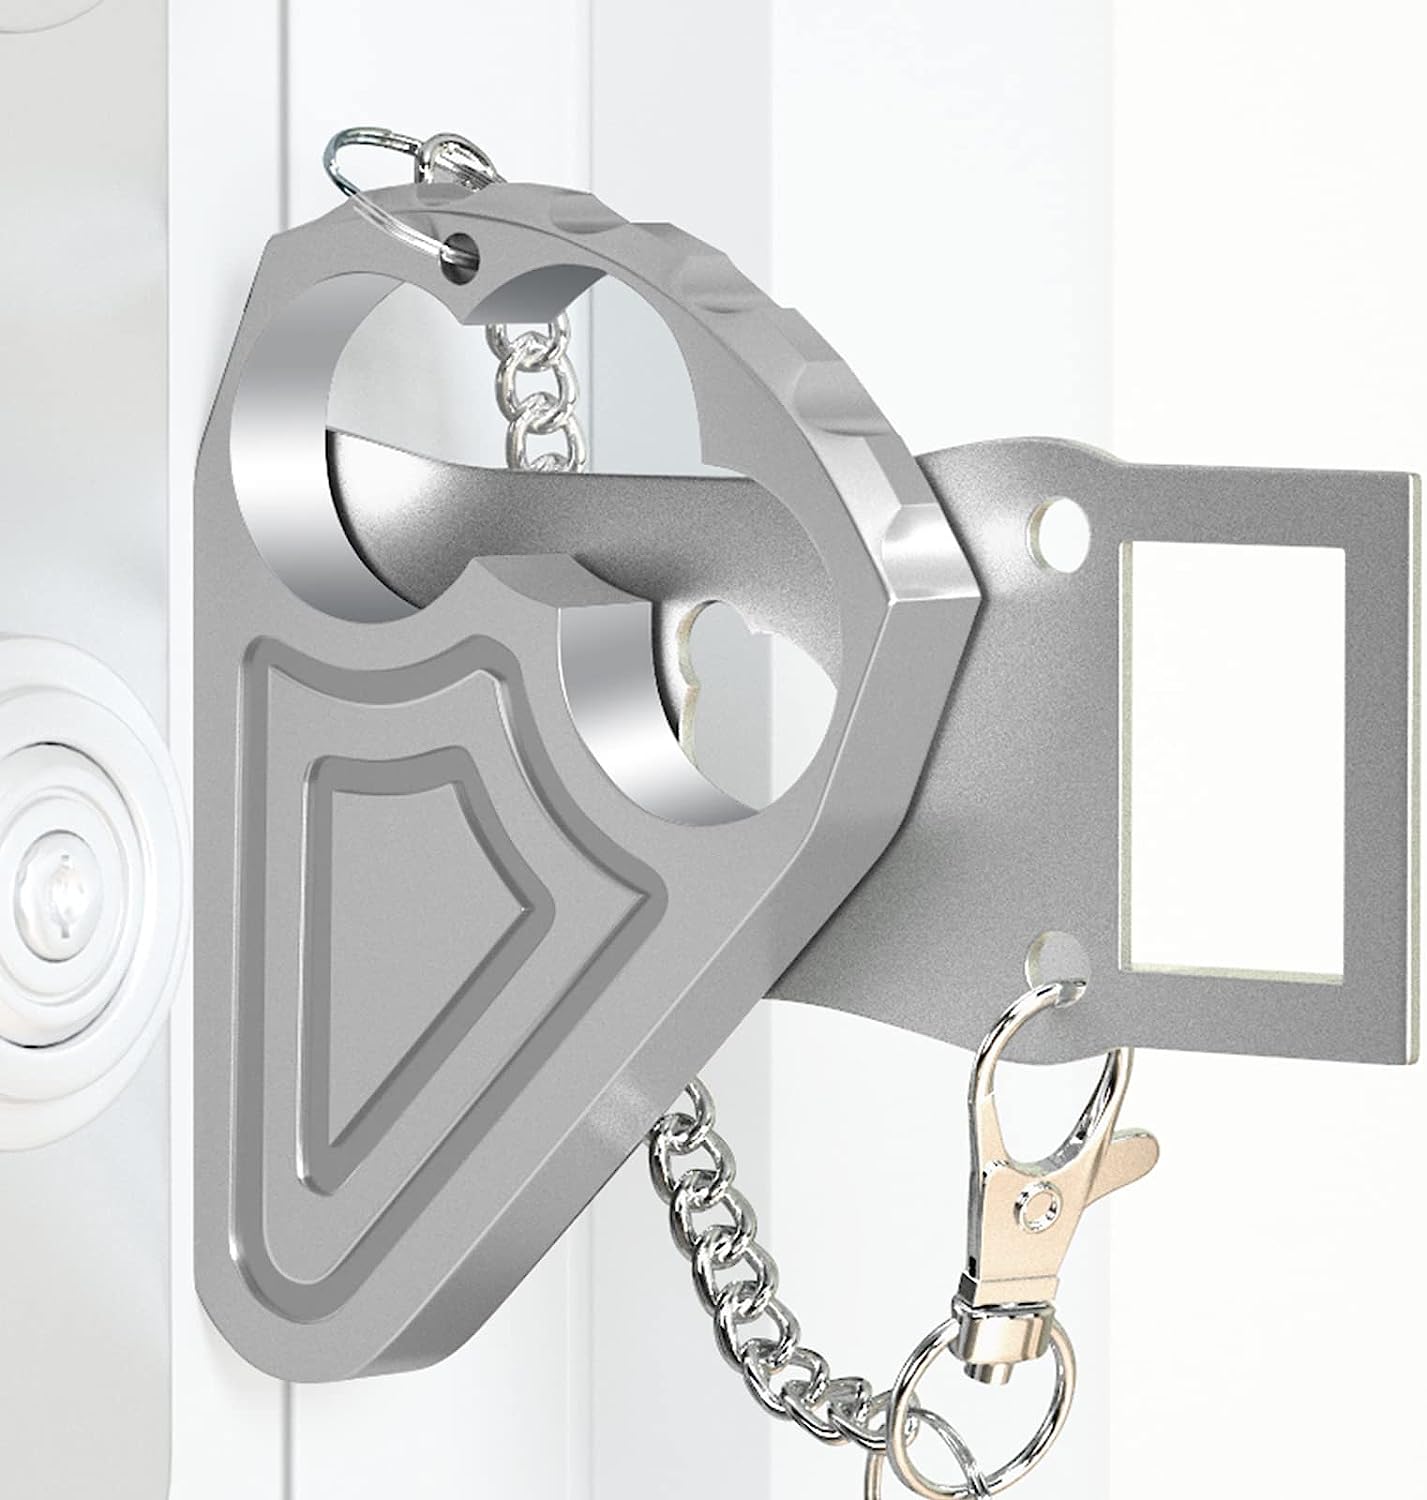 Urgeeo Portable Door Lock, Hotel Door Locks for Travelers Metal, Prevent Unauthorized Entry, Apartment Essentials, Home Security, Traveling Essentials (Silver)
